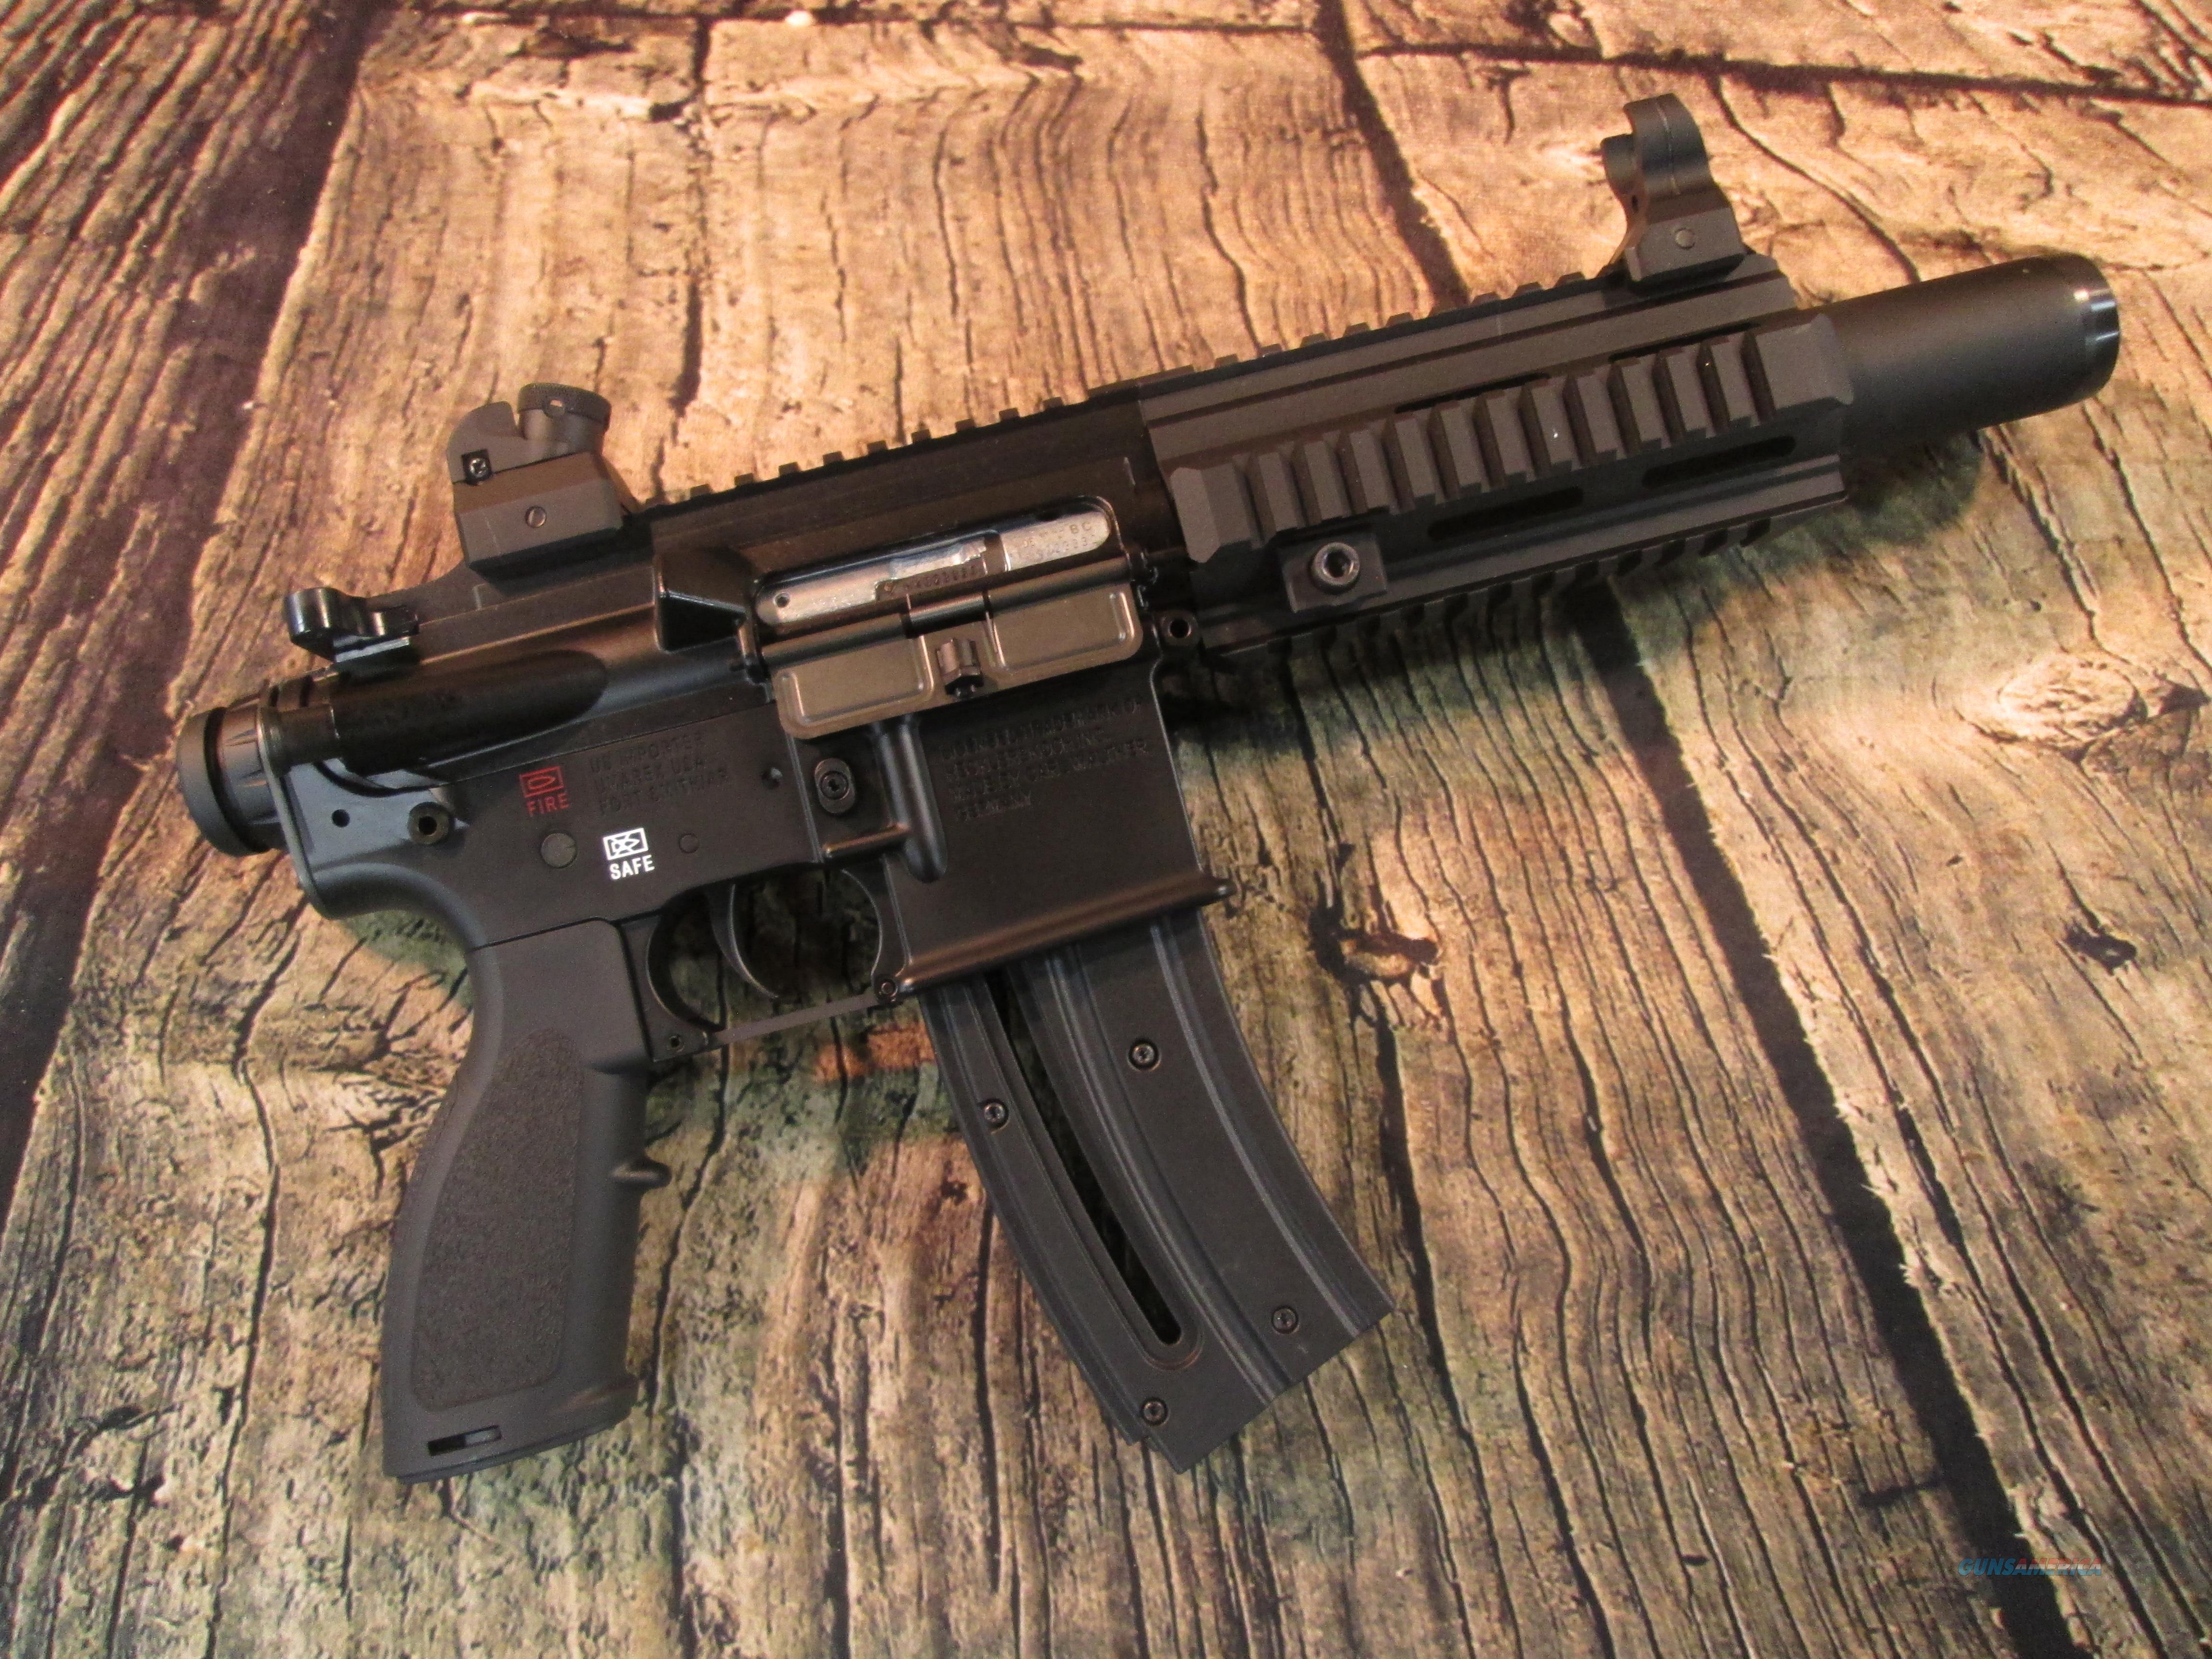 h-k-416-pistol-by-umarex-22lr-used-for-sale-at-gunsamerica